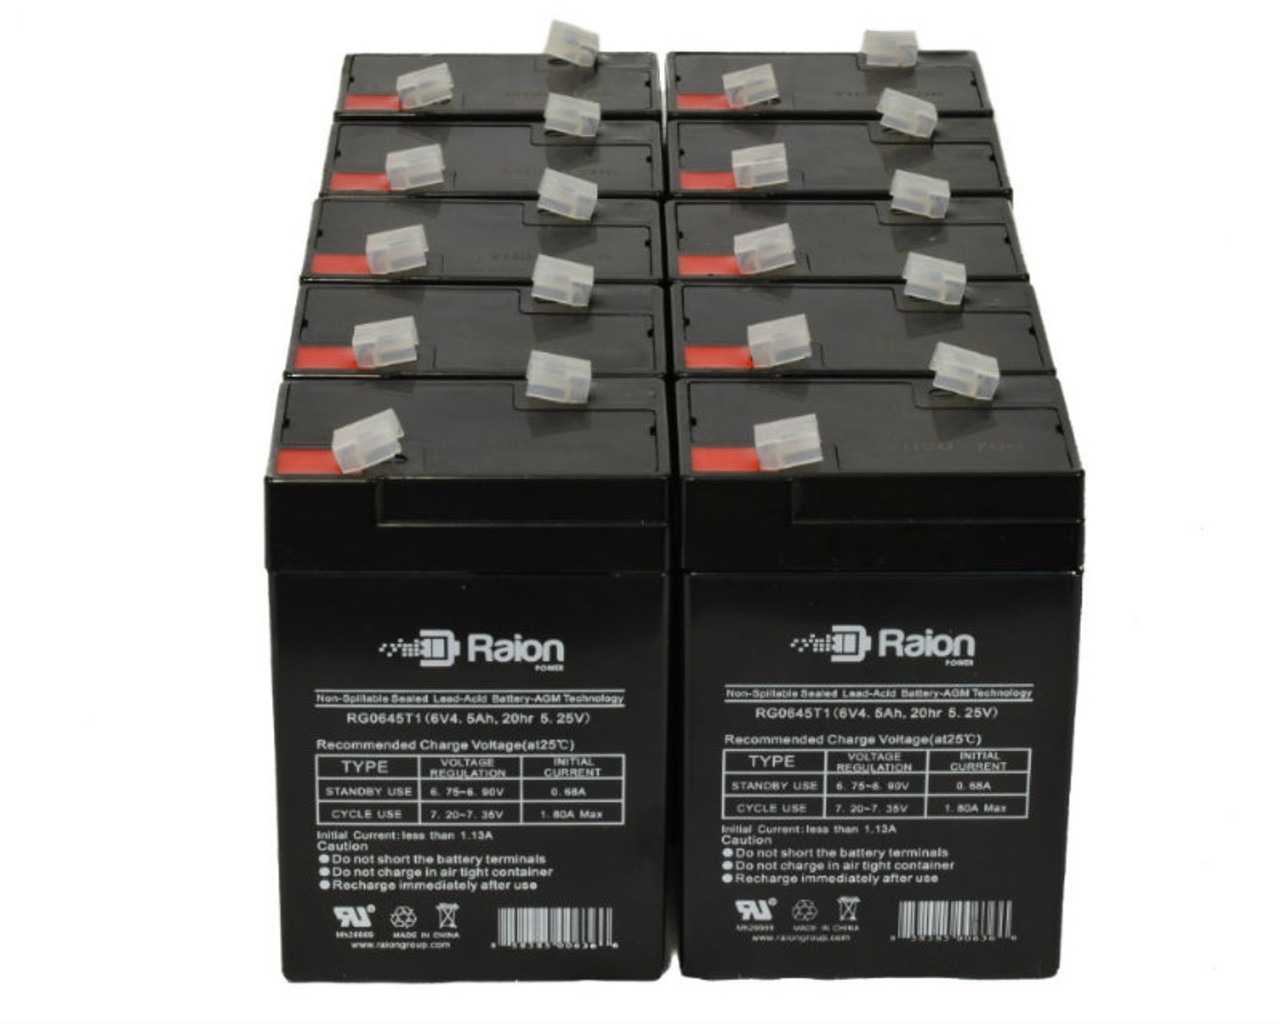 Raion Power 6V 4.5Ah Replacement Emergency Light Battery for Prescolite E56060 - 10 Pack